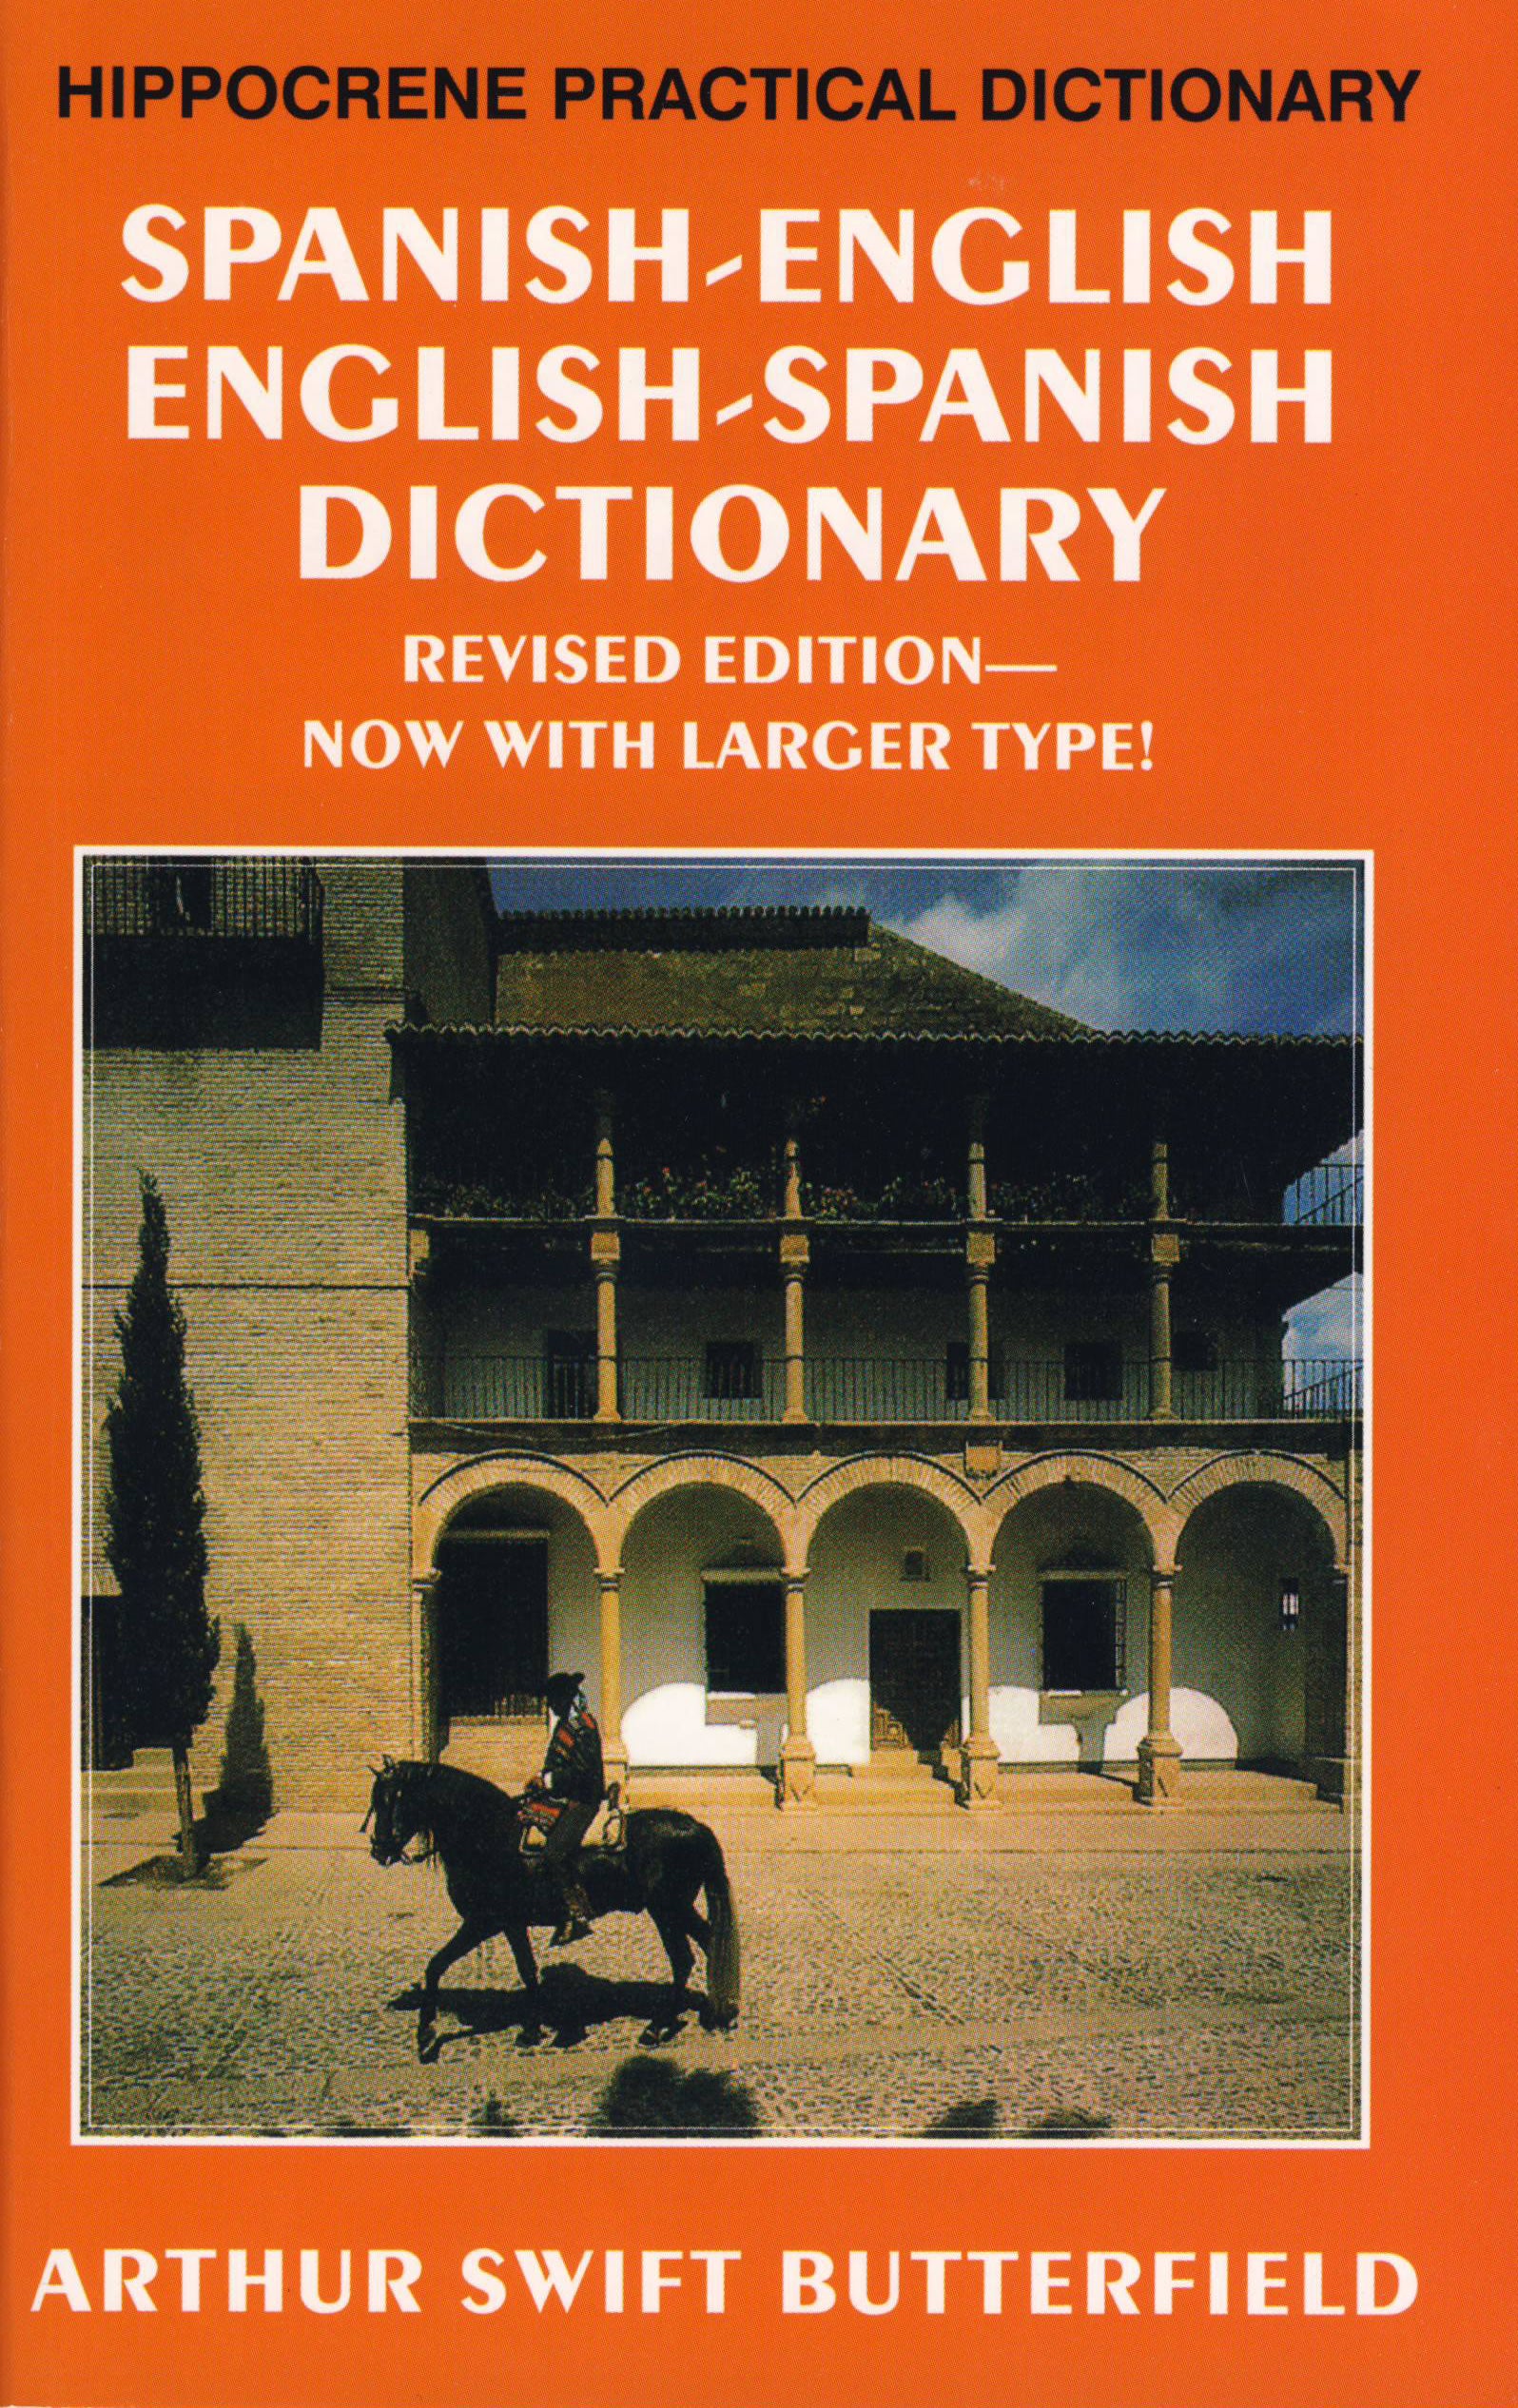 Spanish- English / English-Spanish Hipp Practical Dictionary